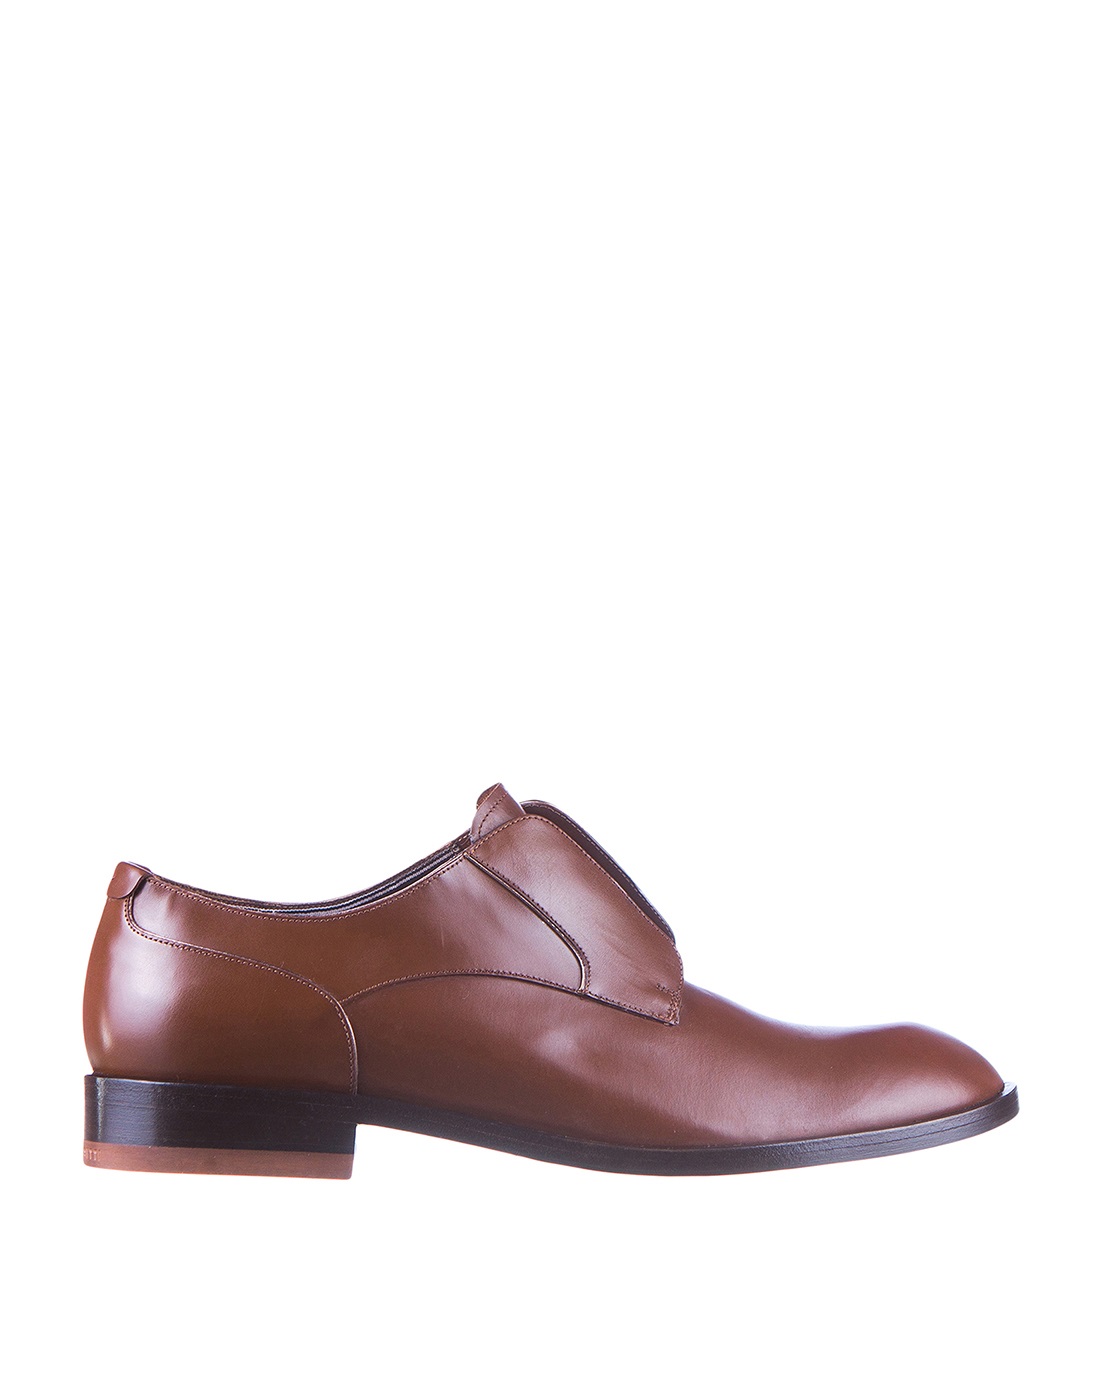 Туфли коричневые женские Fratelli Rossetti S67212-1